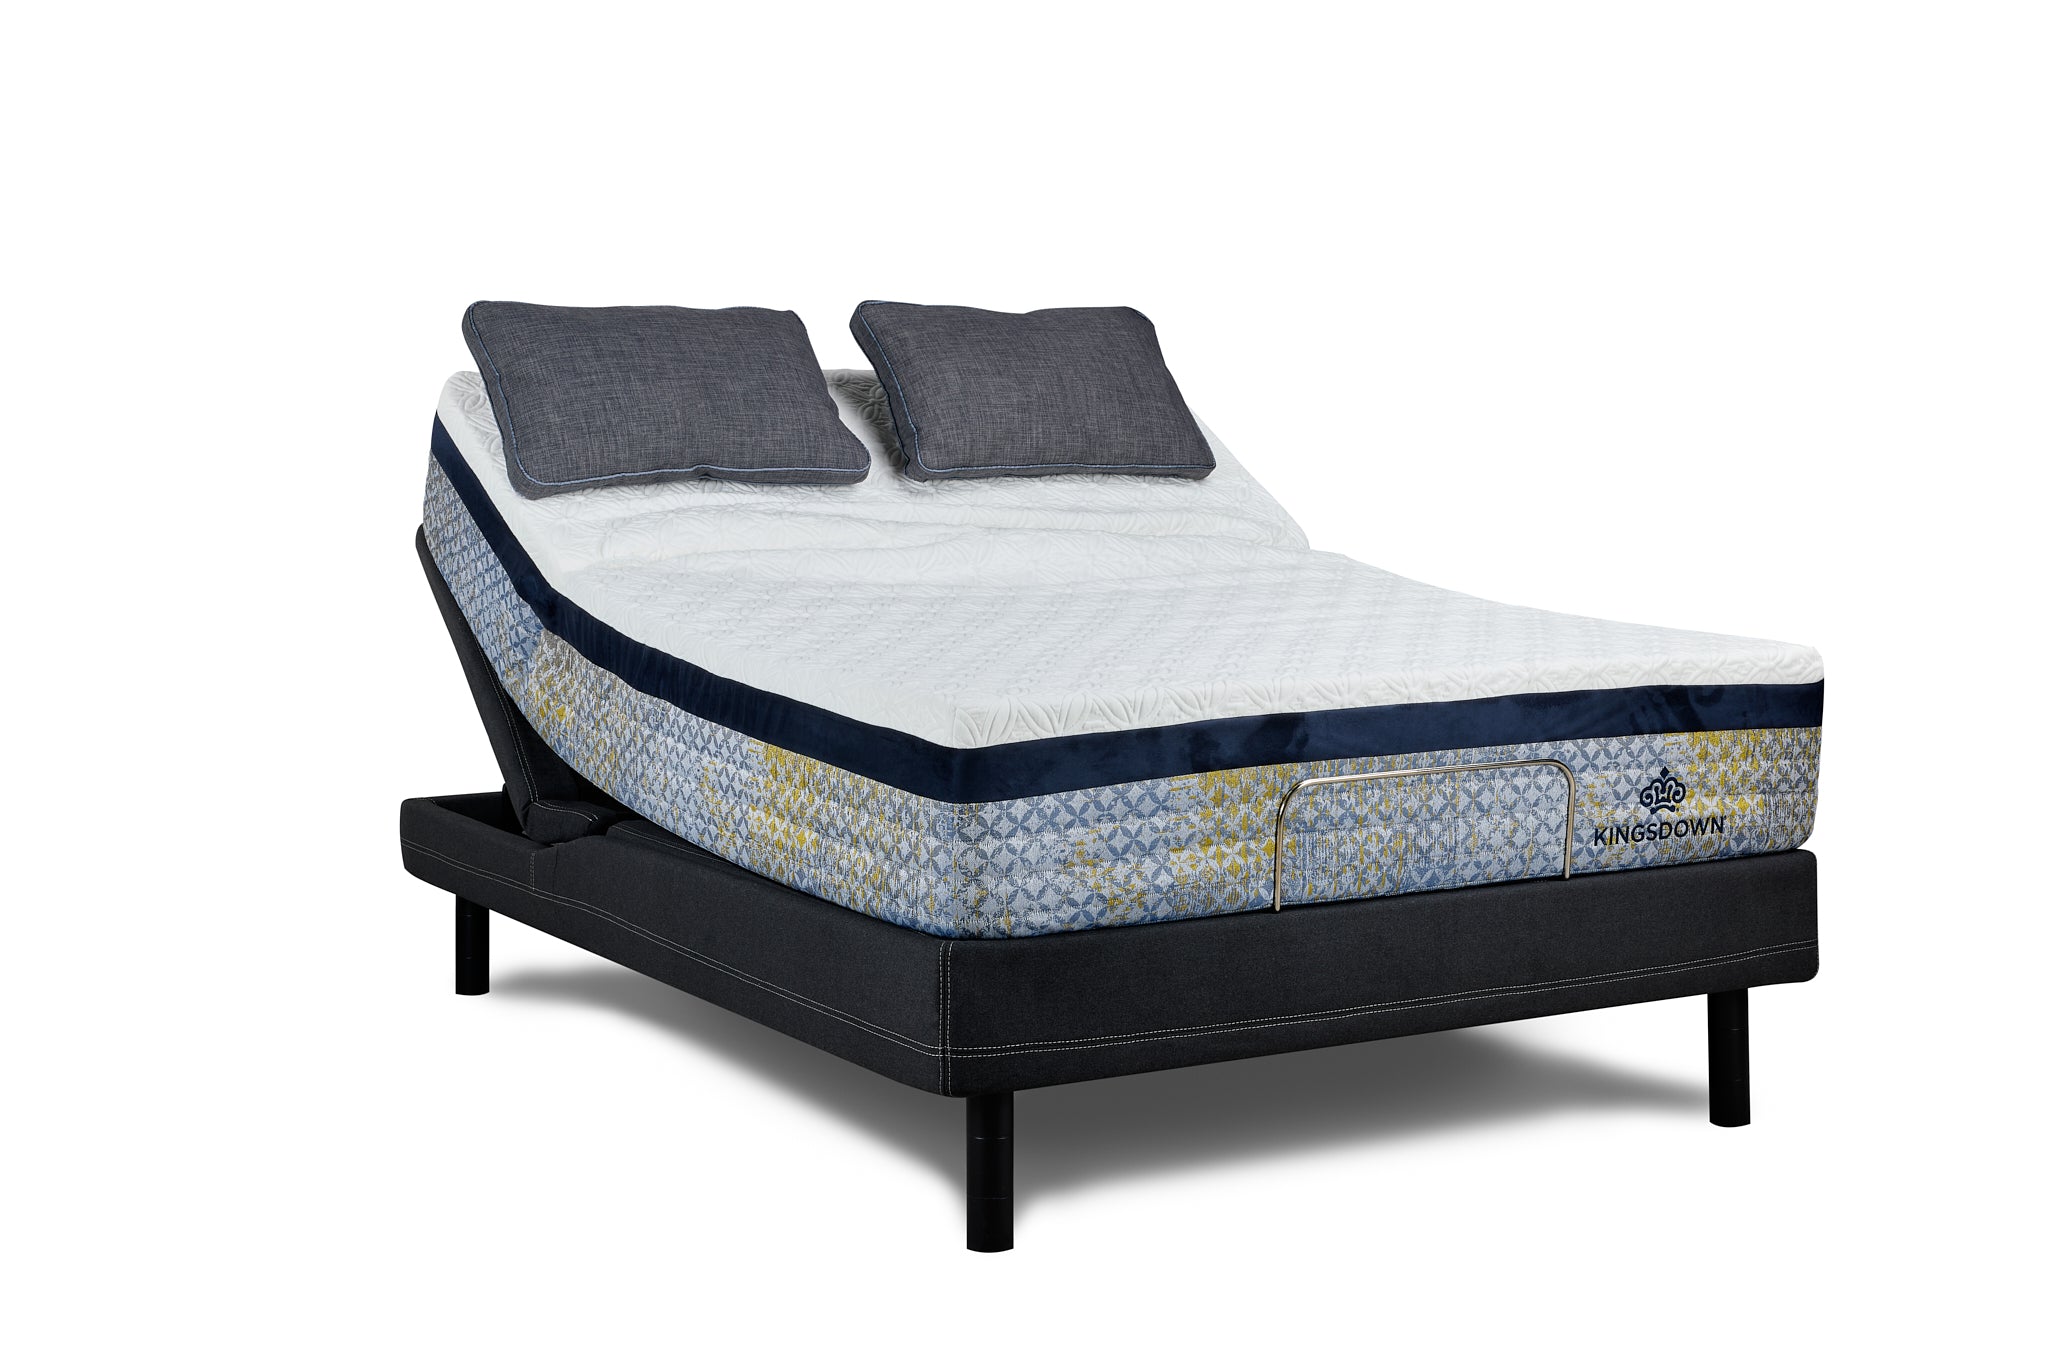 Kingsdown Empress Full/Double Adjustable Bed Package